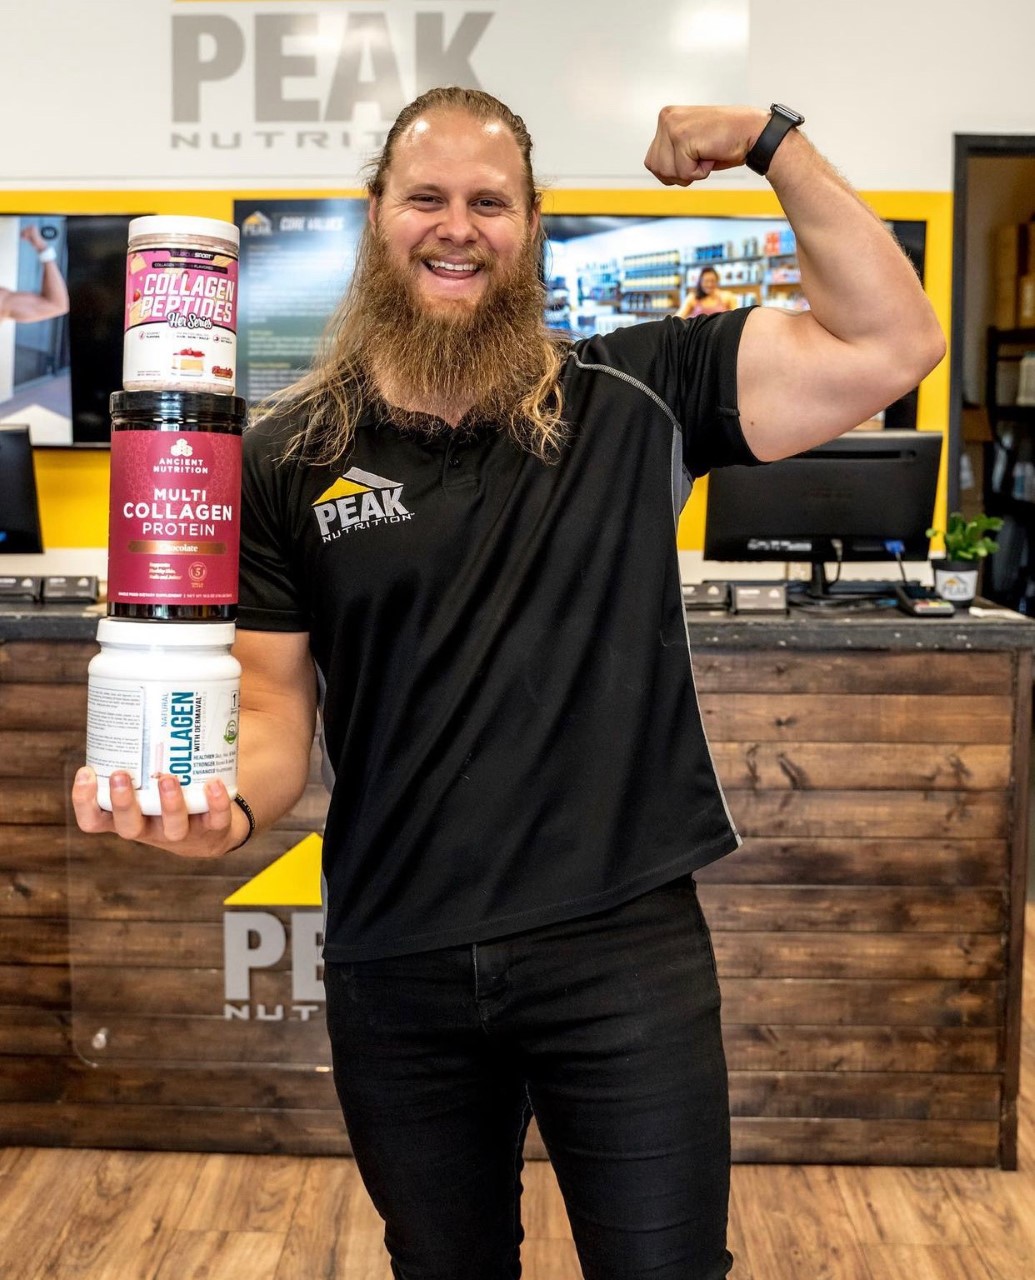 Guy in Peak Nutrition Store Holding Collagen Supplement